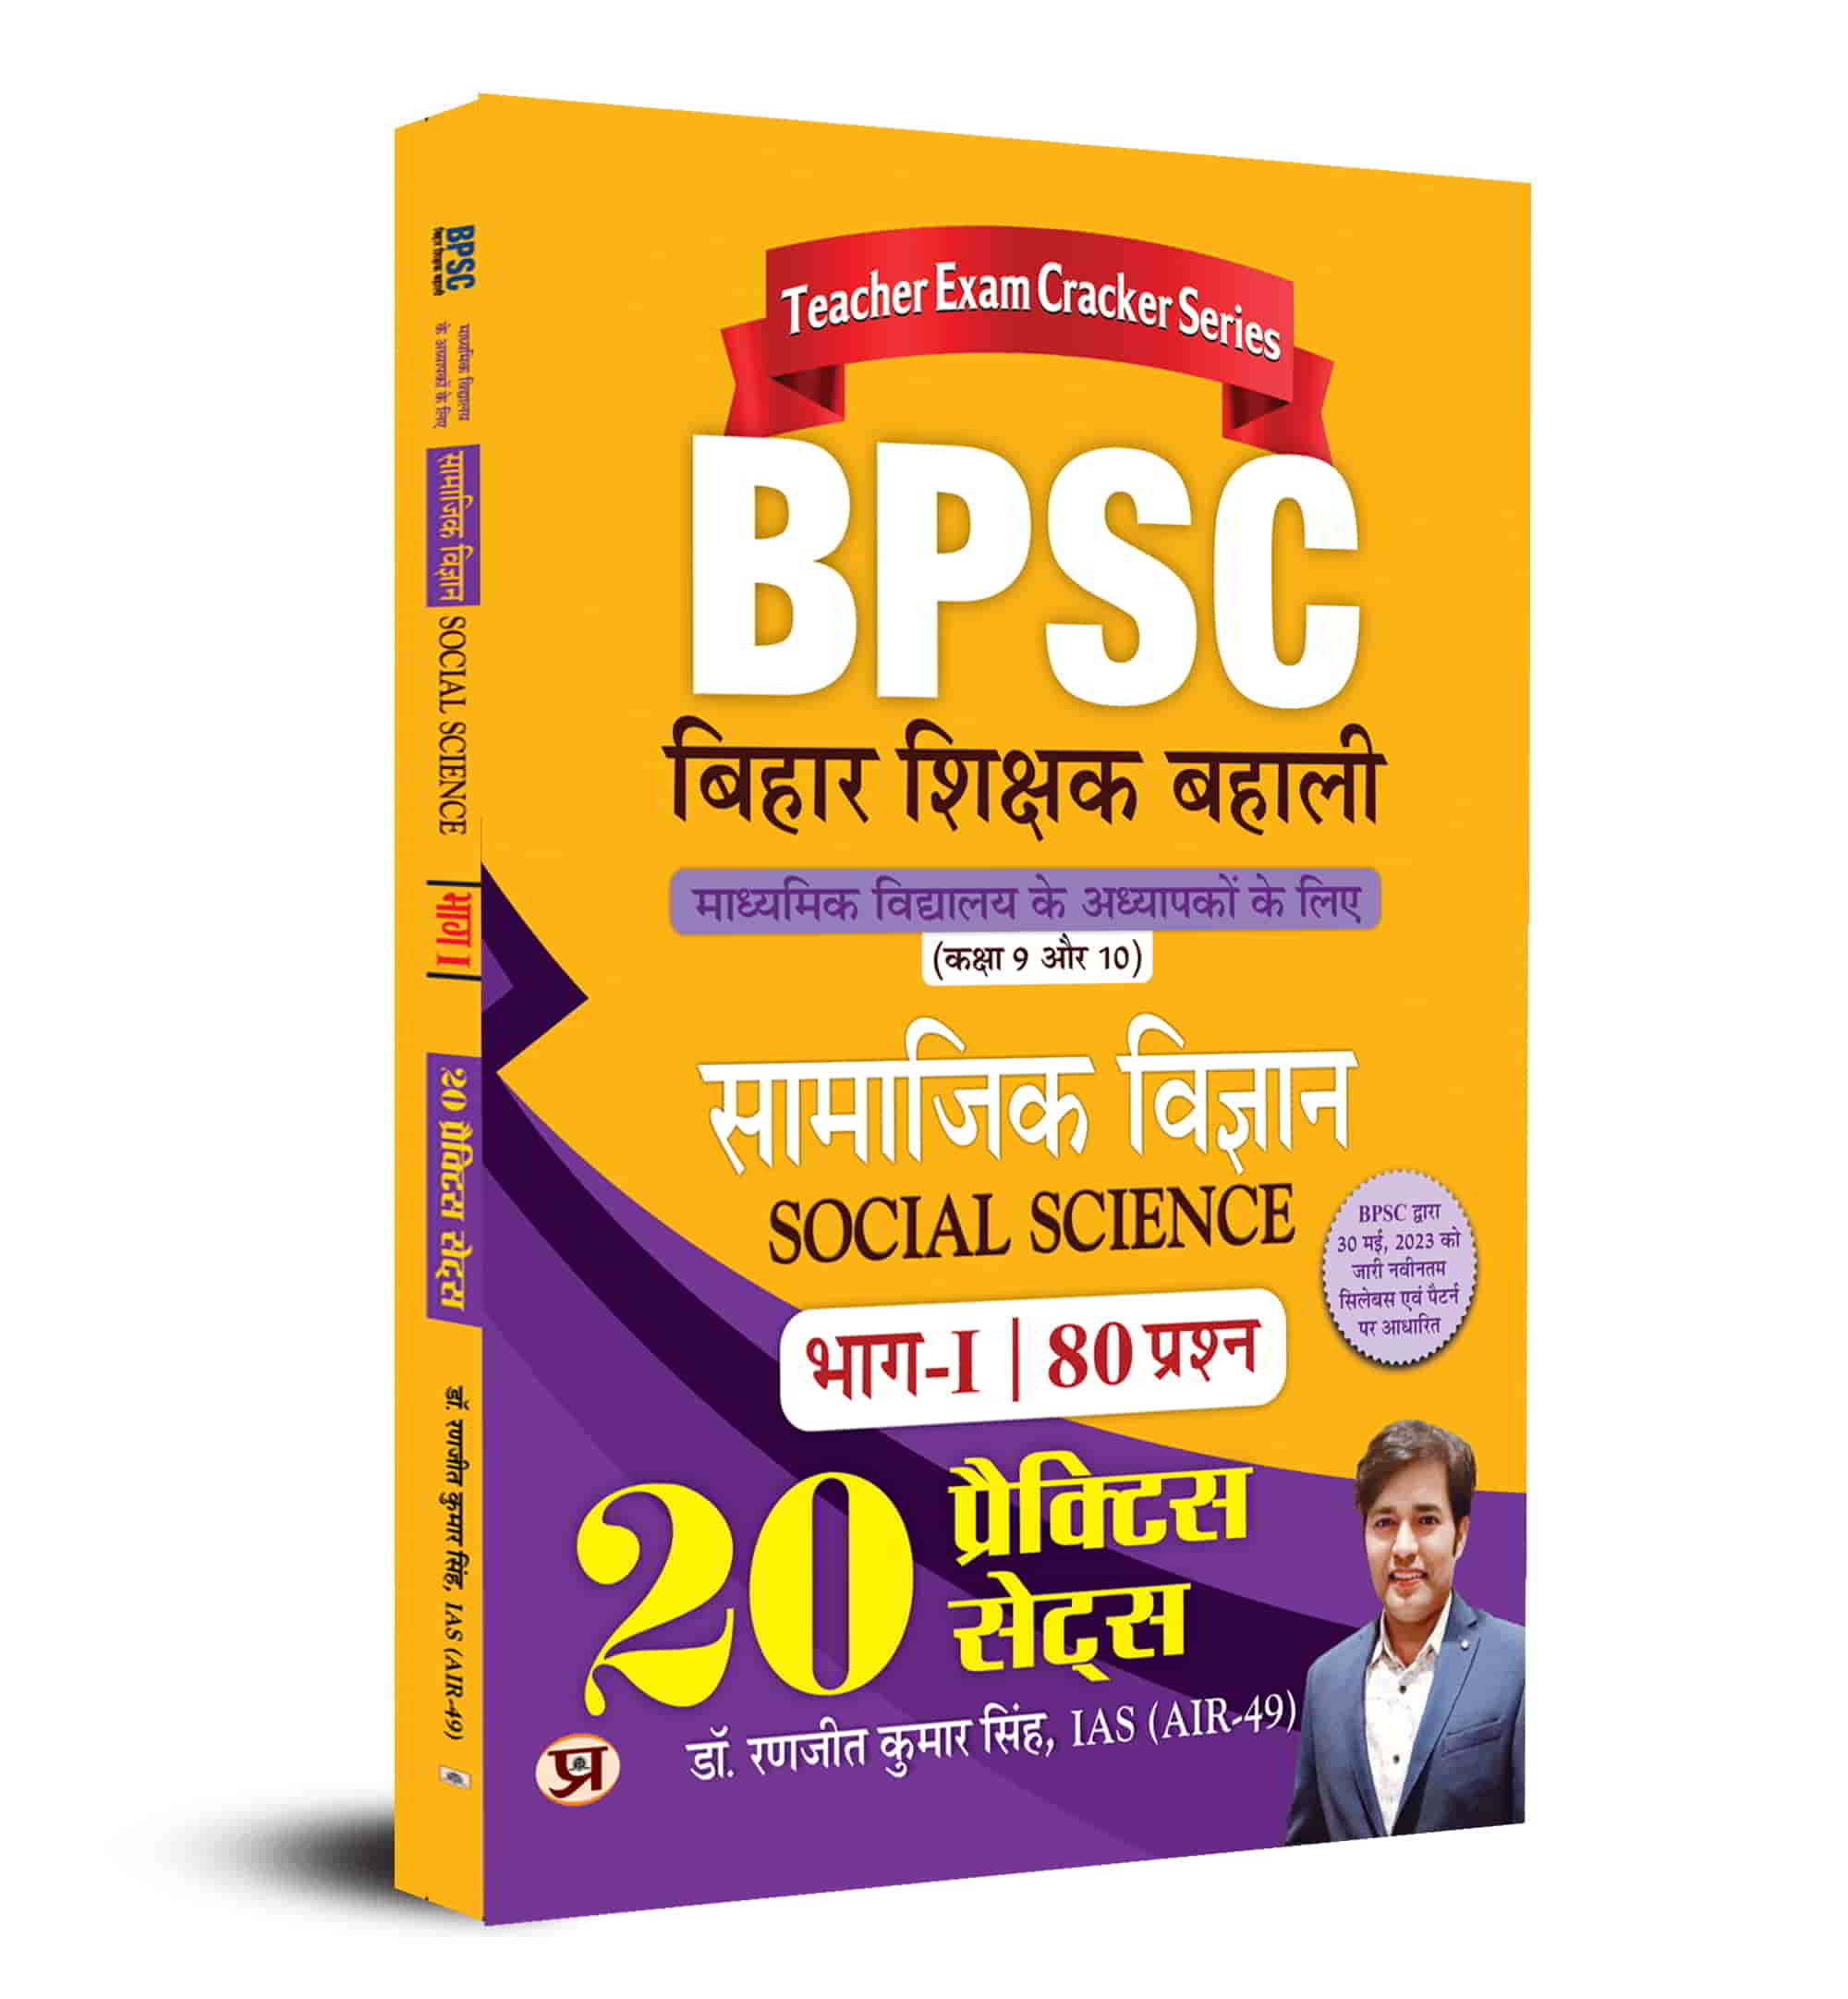 BPSC Bihar Teacher Recruitment Social Science 20 practice sets Hindi Book